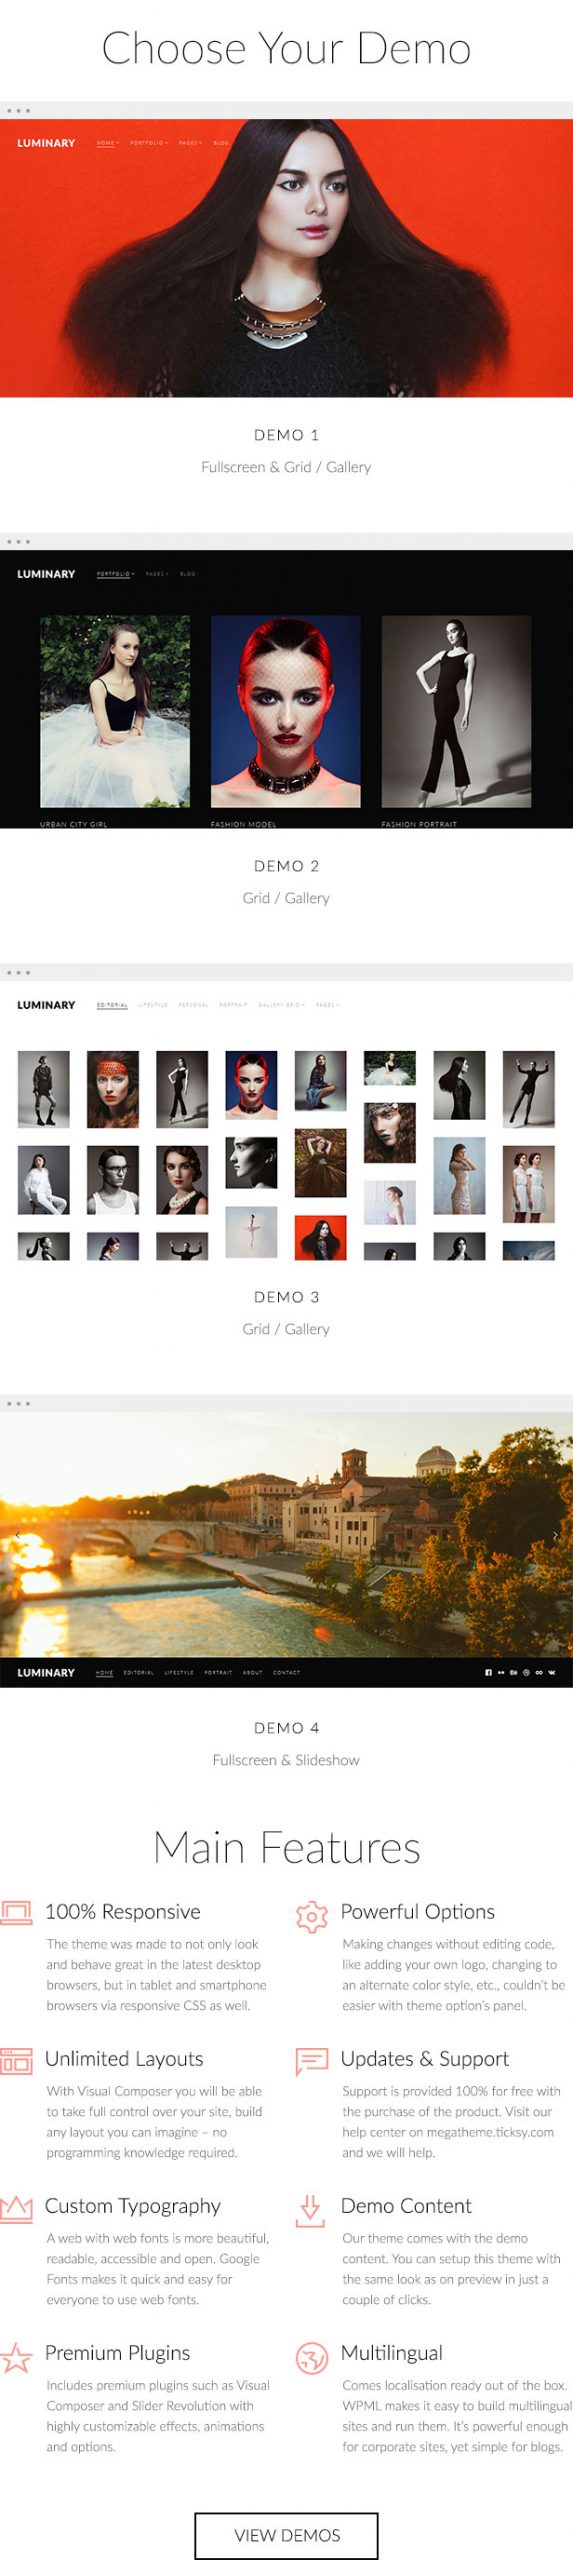 Luminary - Portfolio / Photography WordPress Theme - 1